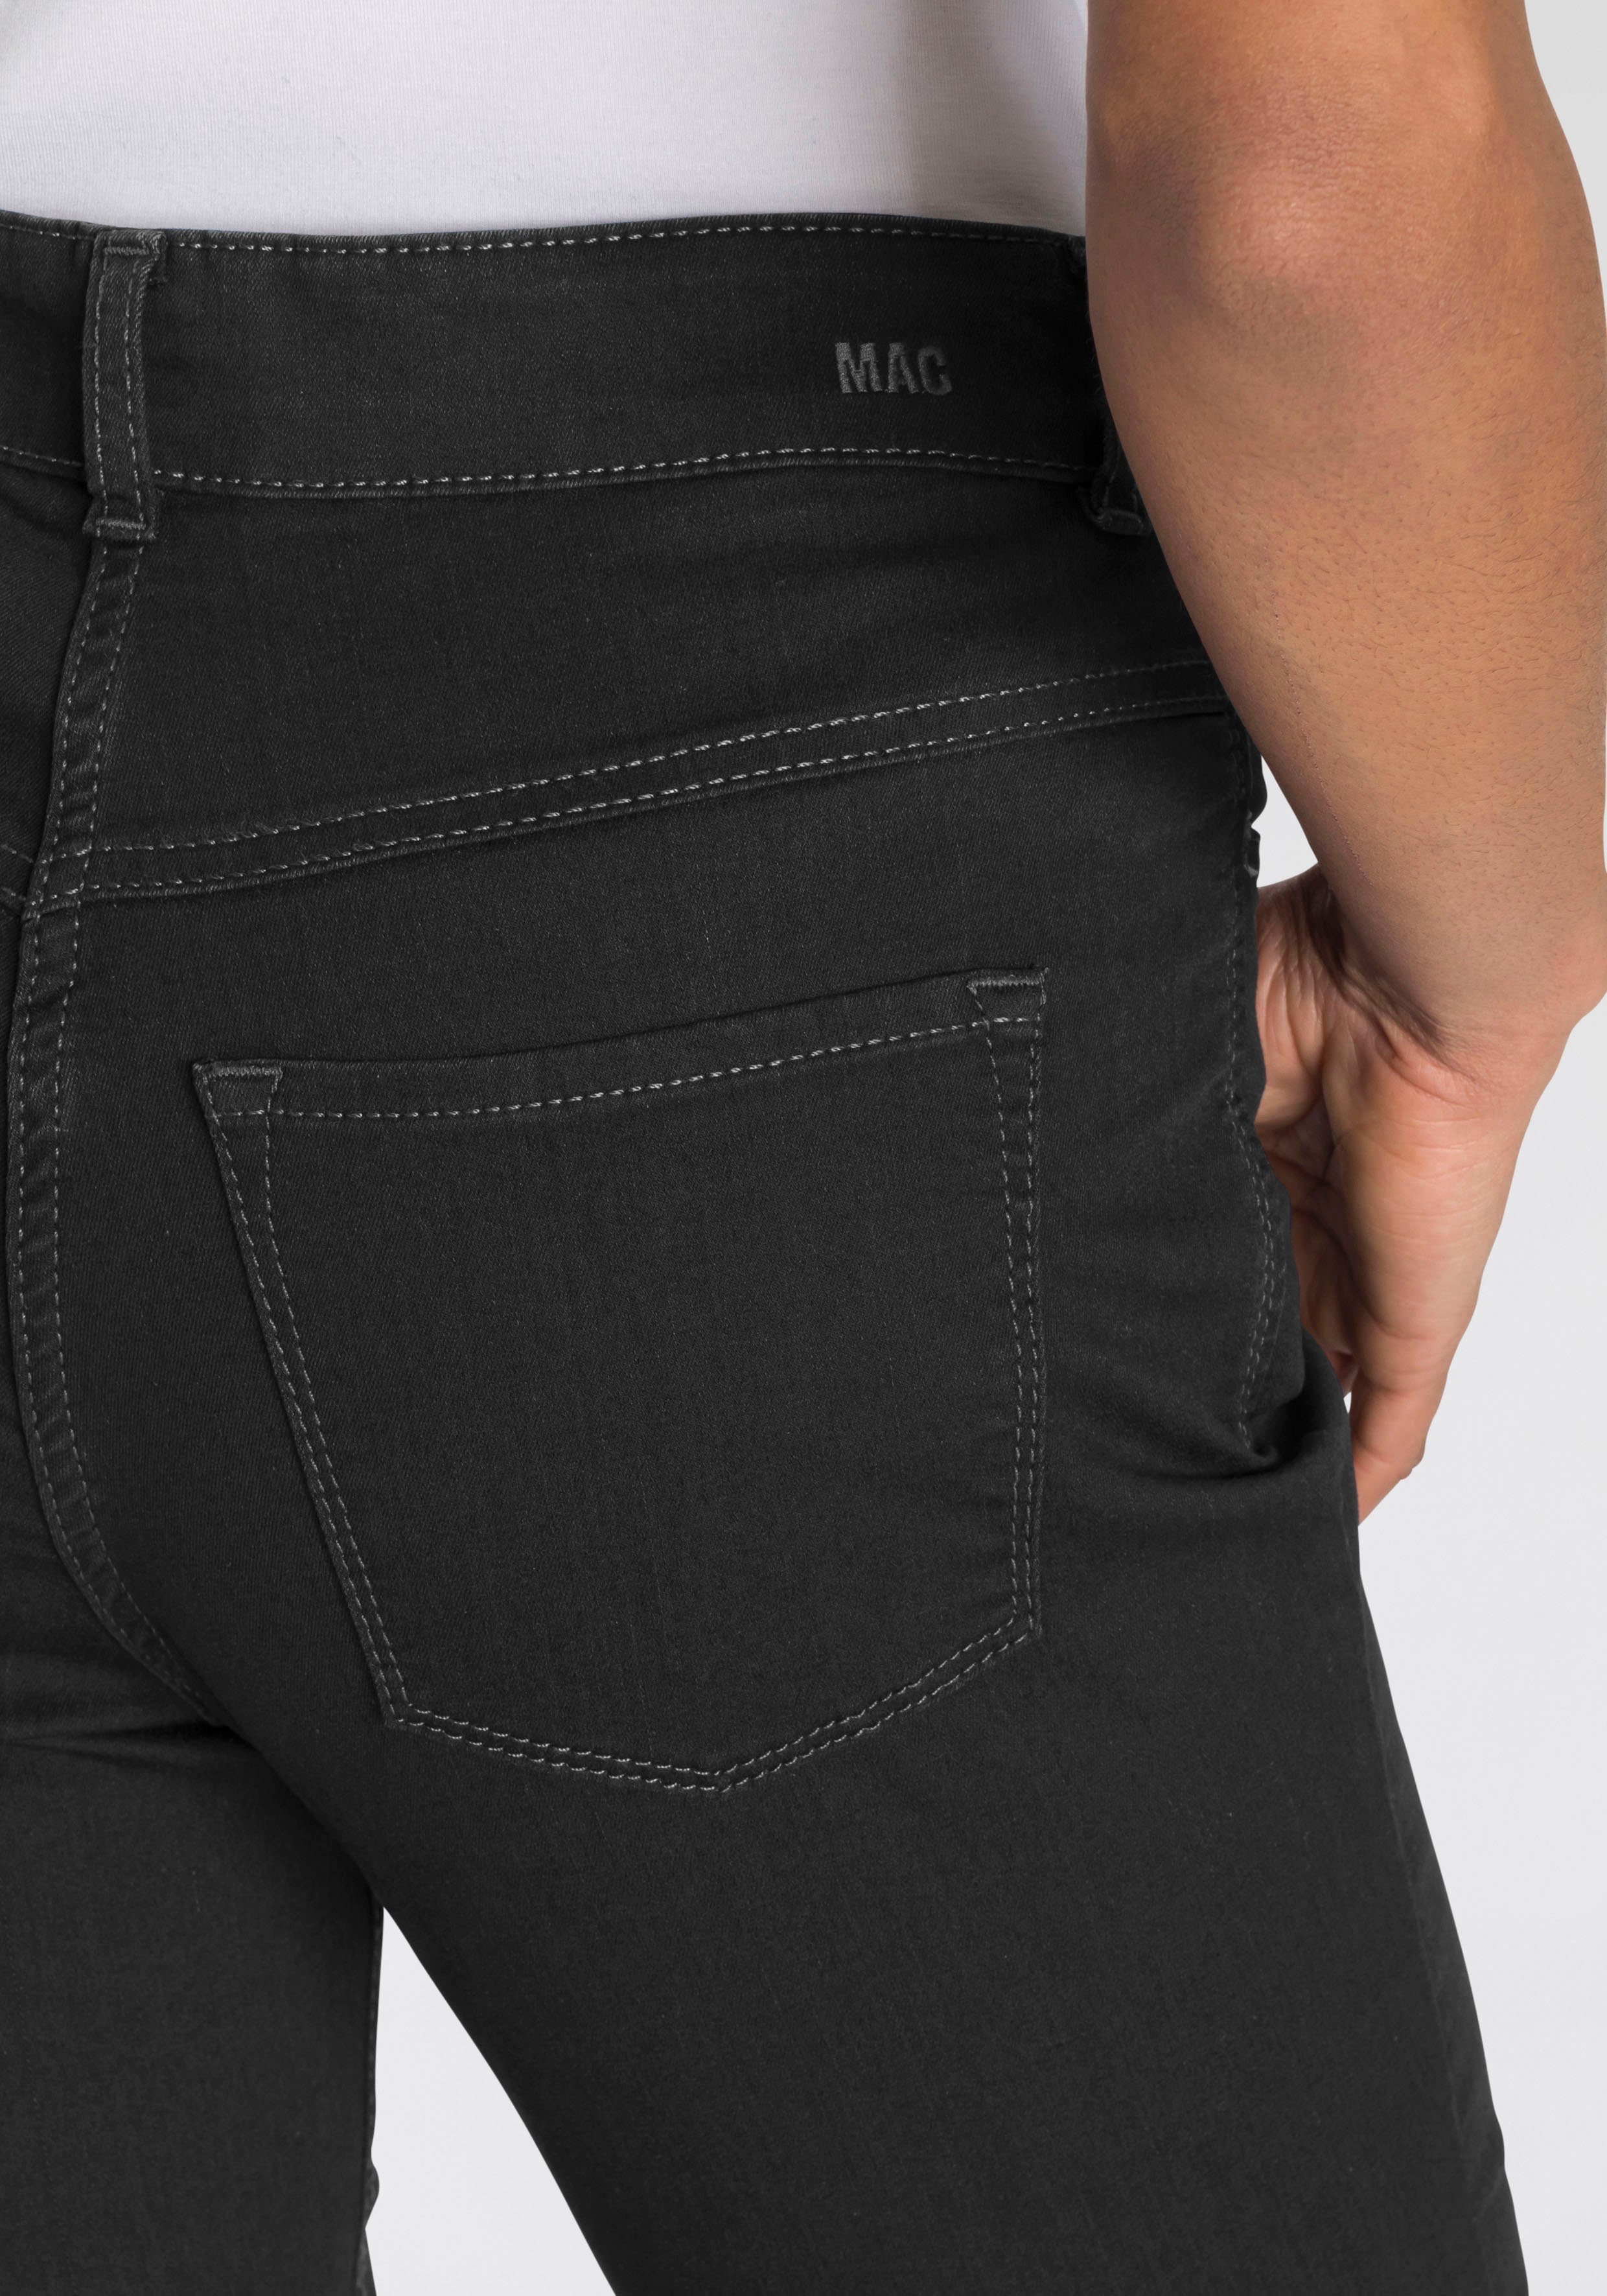 Qualität Tag Power-Stretch black-black ganzen bequem Skinny-fit-Jeans den sitzt MAC Hiperstretch-Skinny